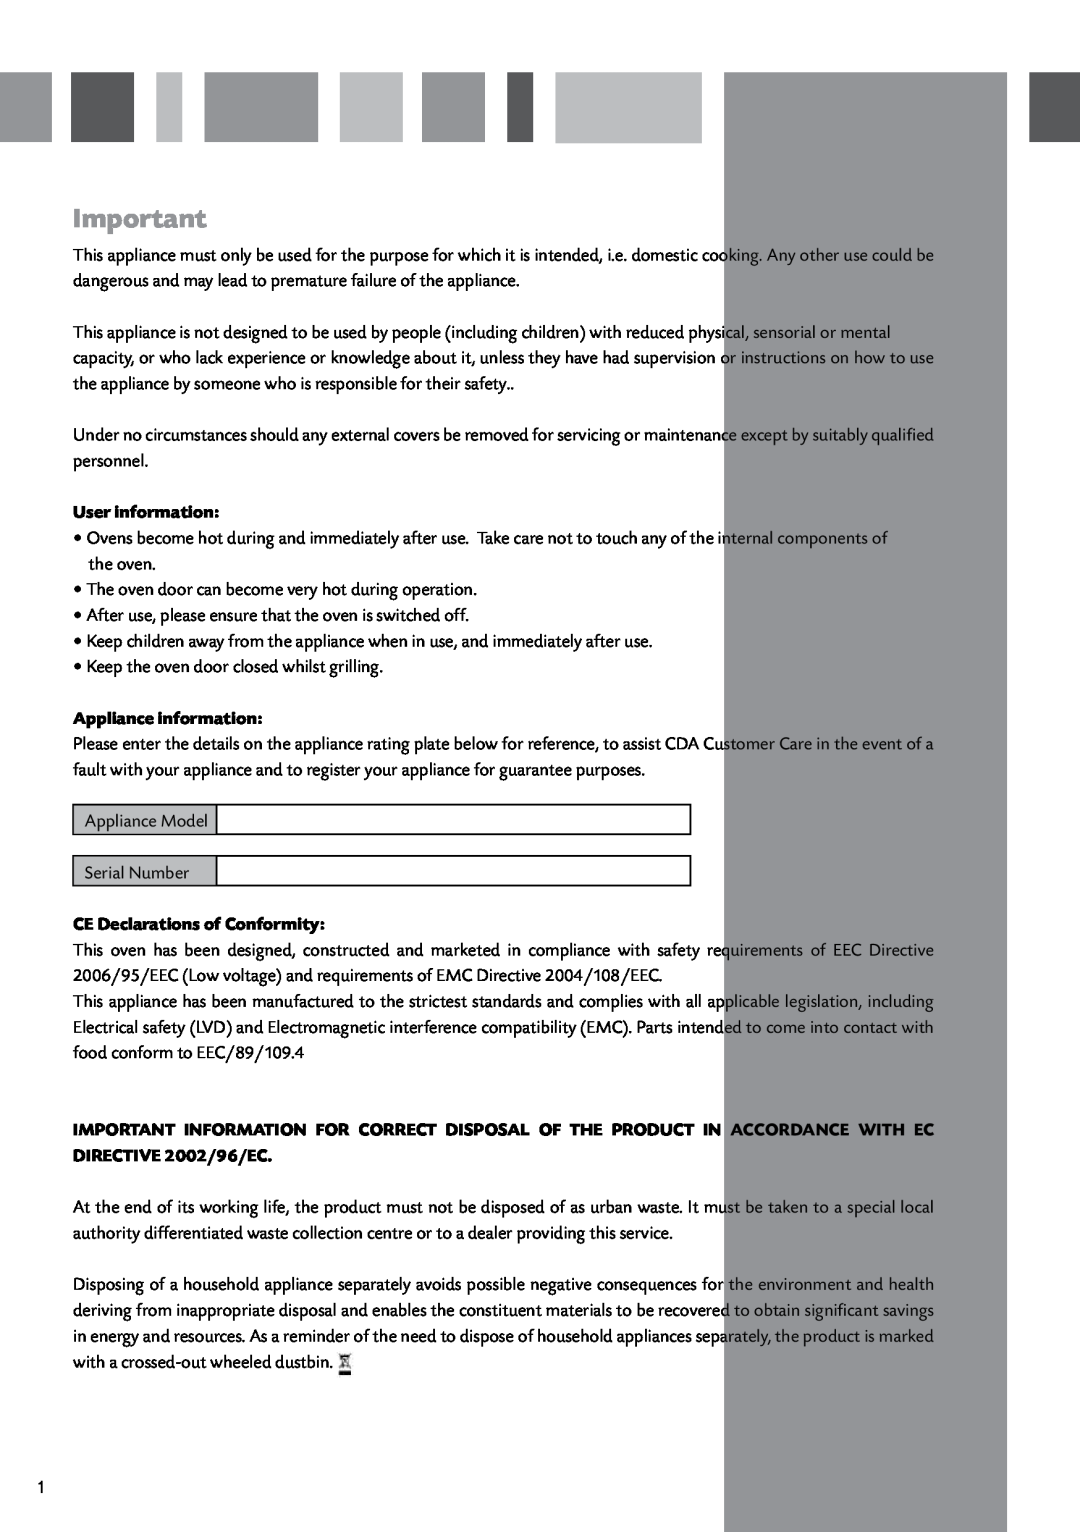 CDA SV430 manual User information, Appliance information, CE Declarations of Conformity 